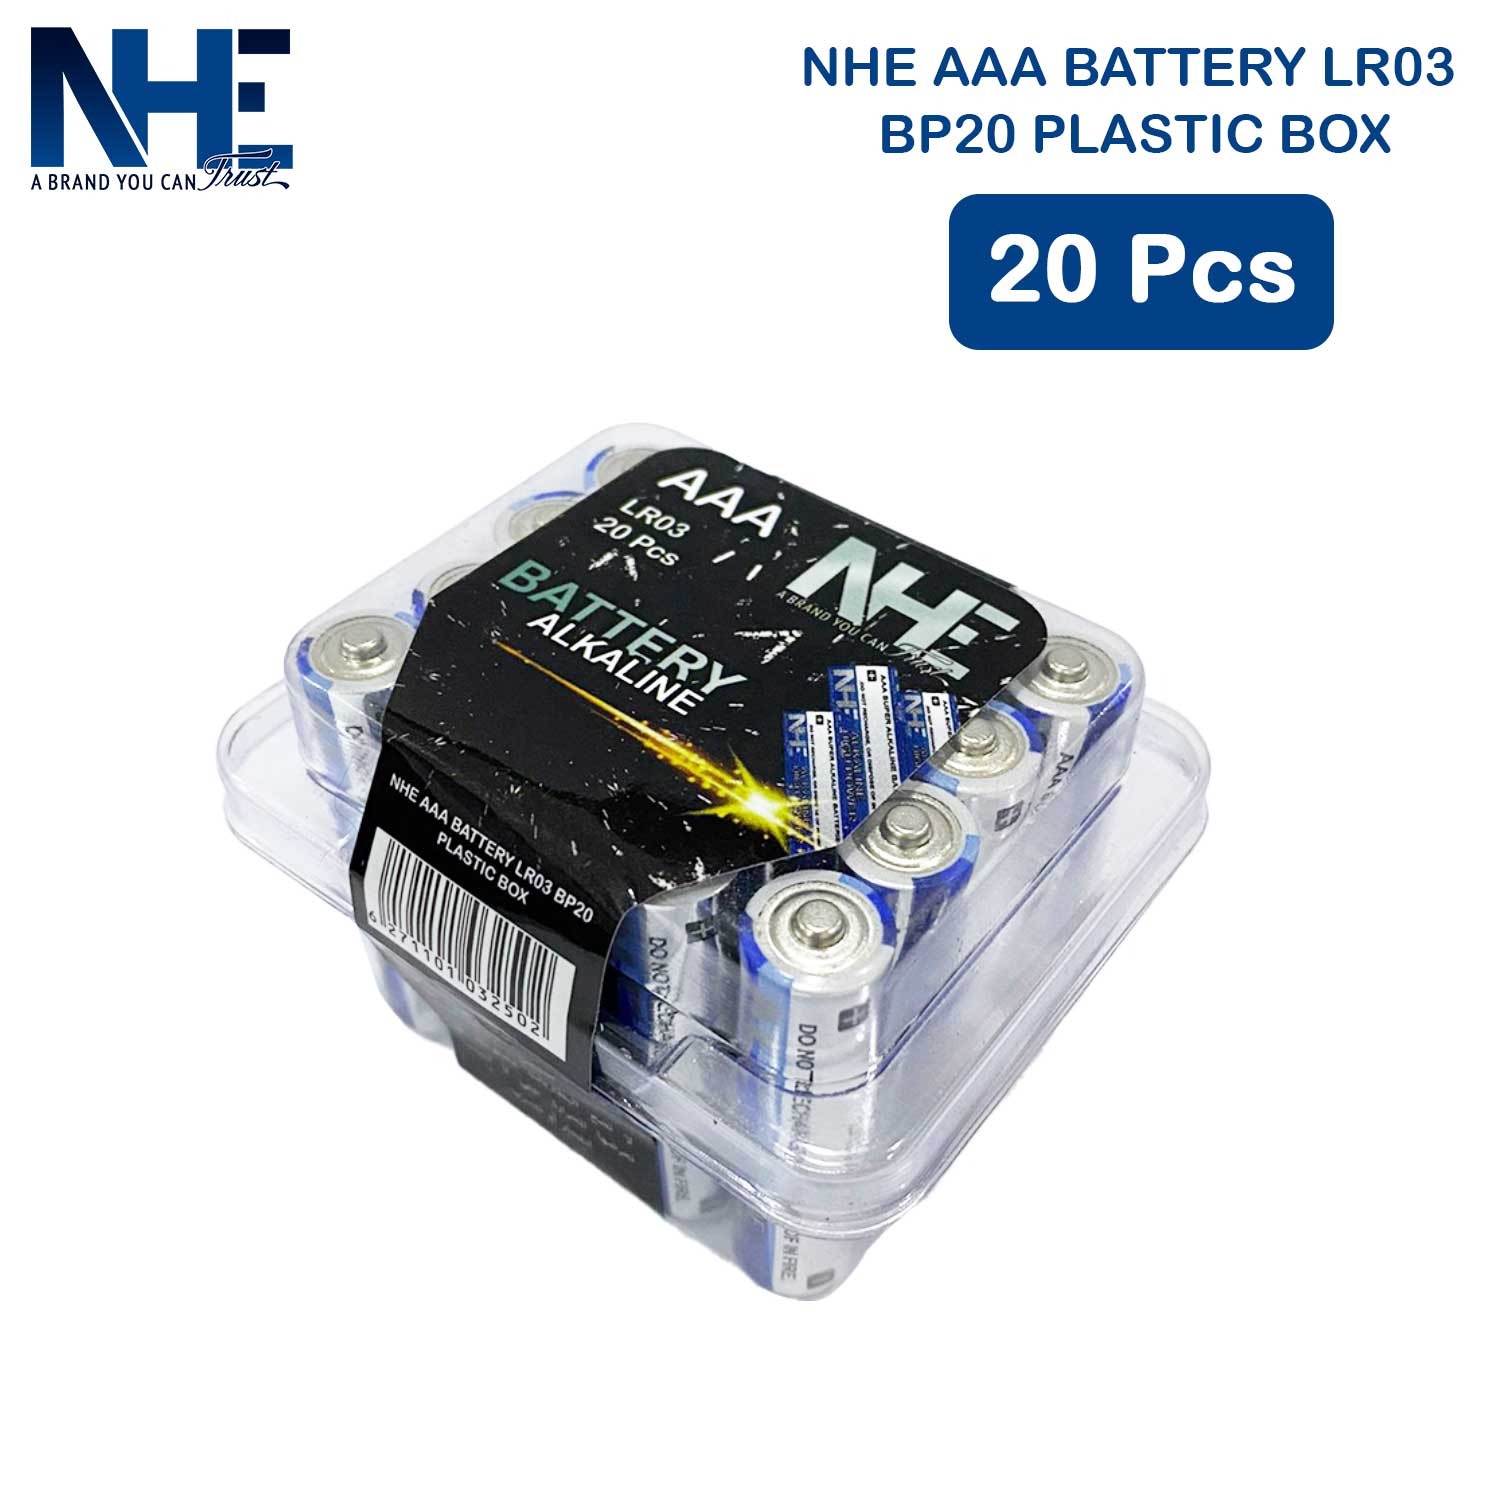 NHE AAA Battery LR03 BP20 Plastic Box